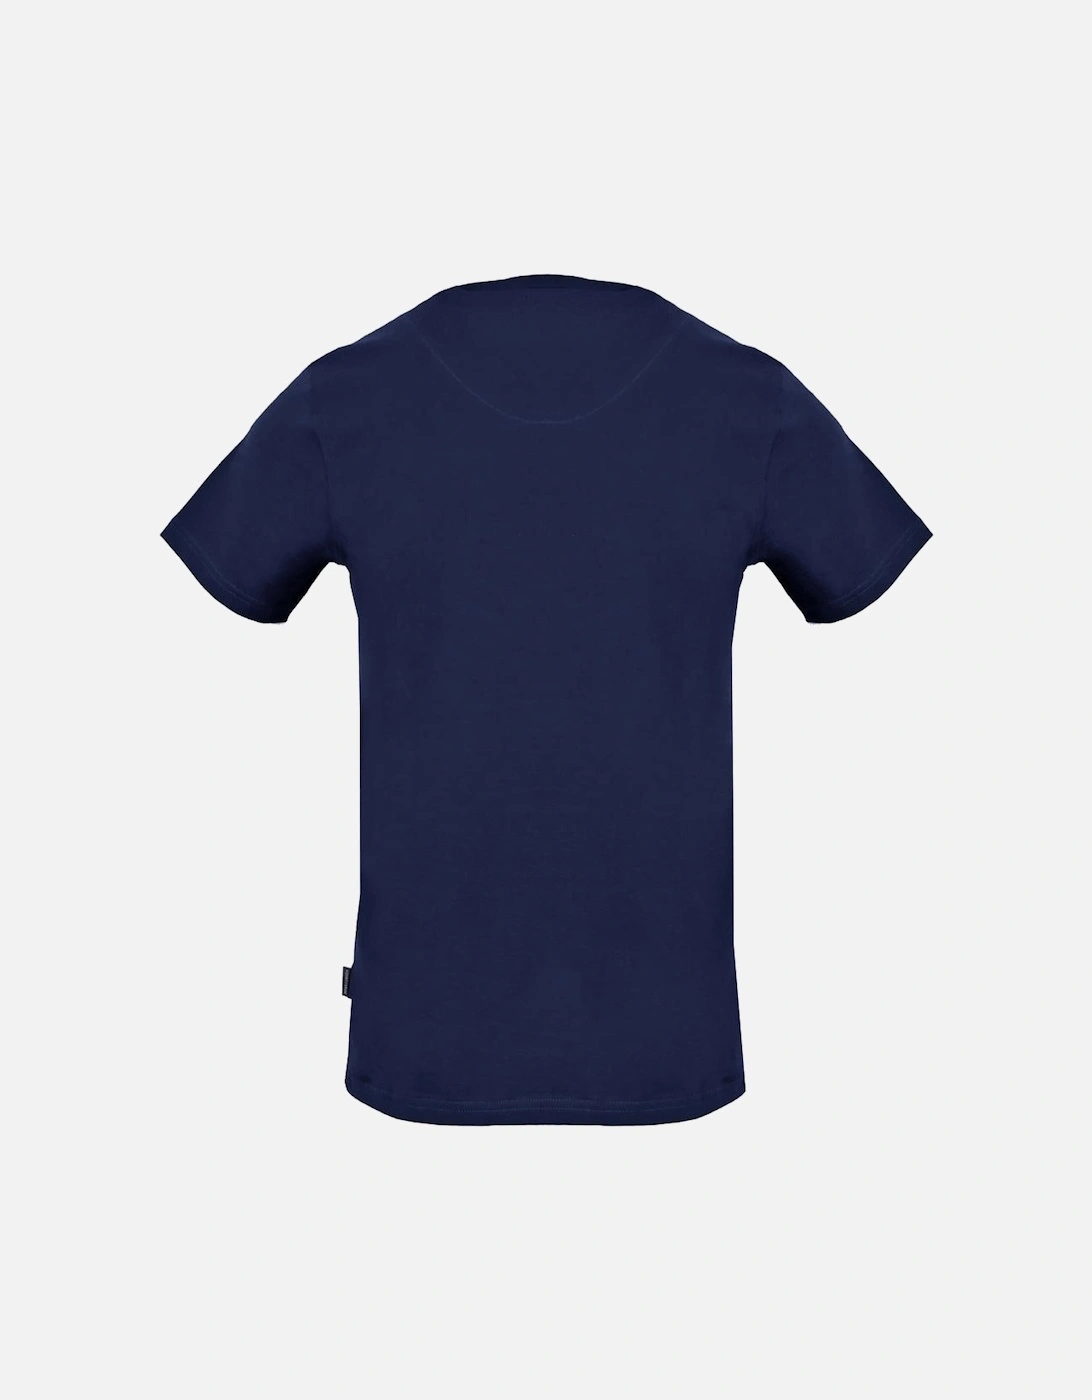 Brand Aldis Logo Navy Blue T-Shirt